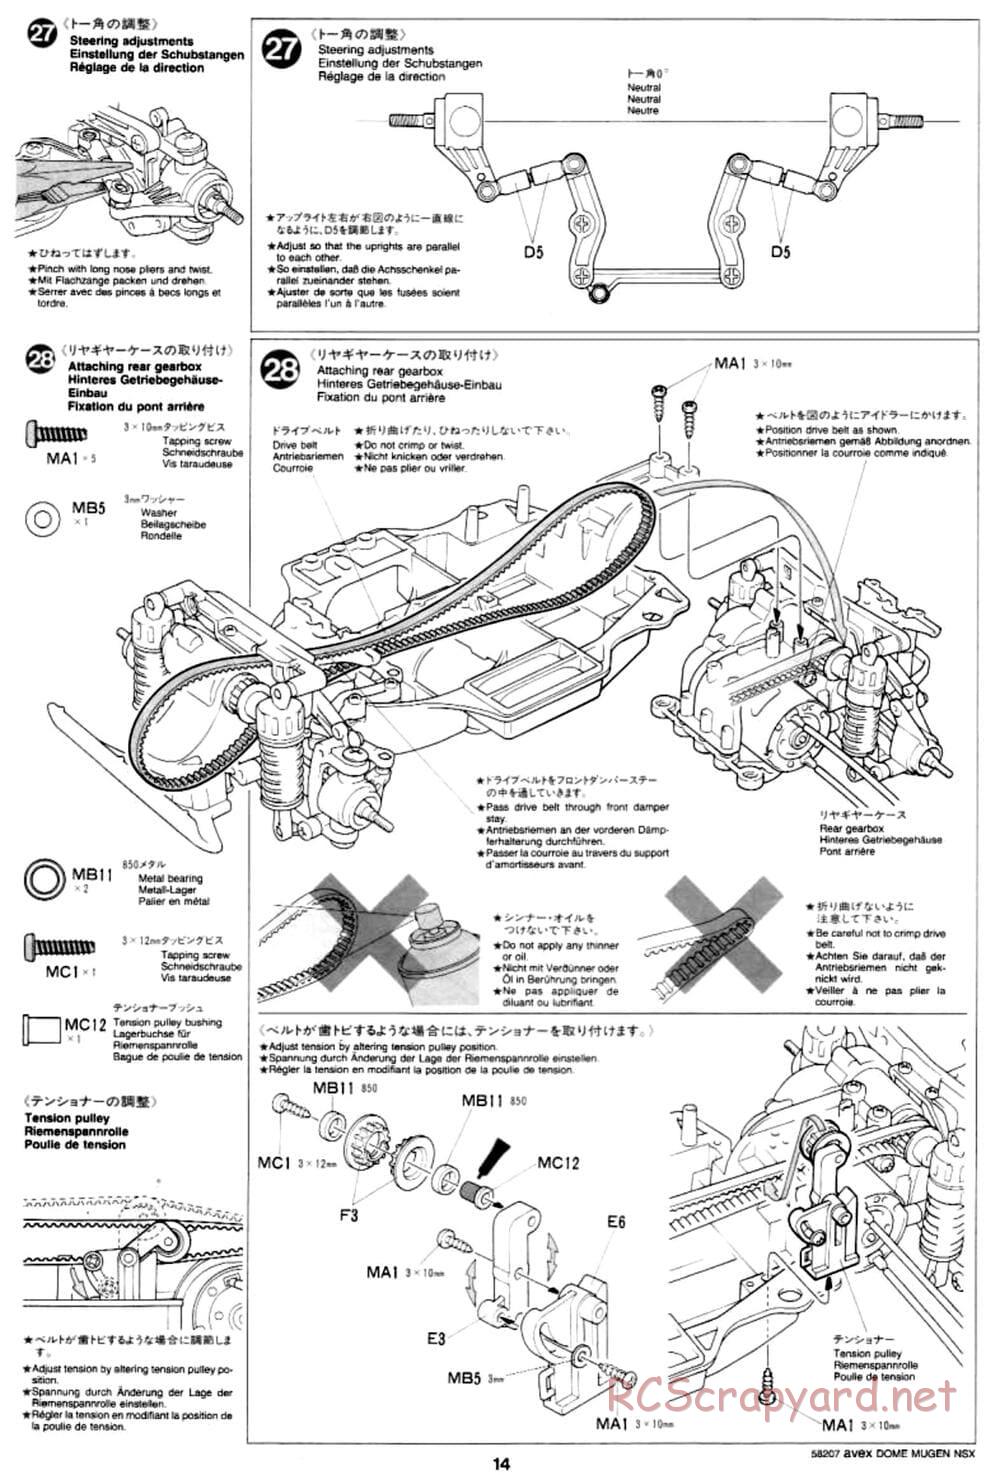 Tamiya - Avex Dome Mugen NSX - TA-03R Chassis - Manual - Page 14